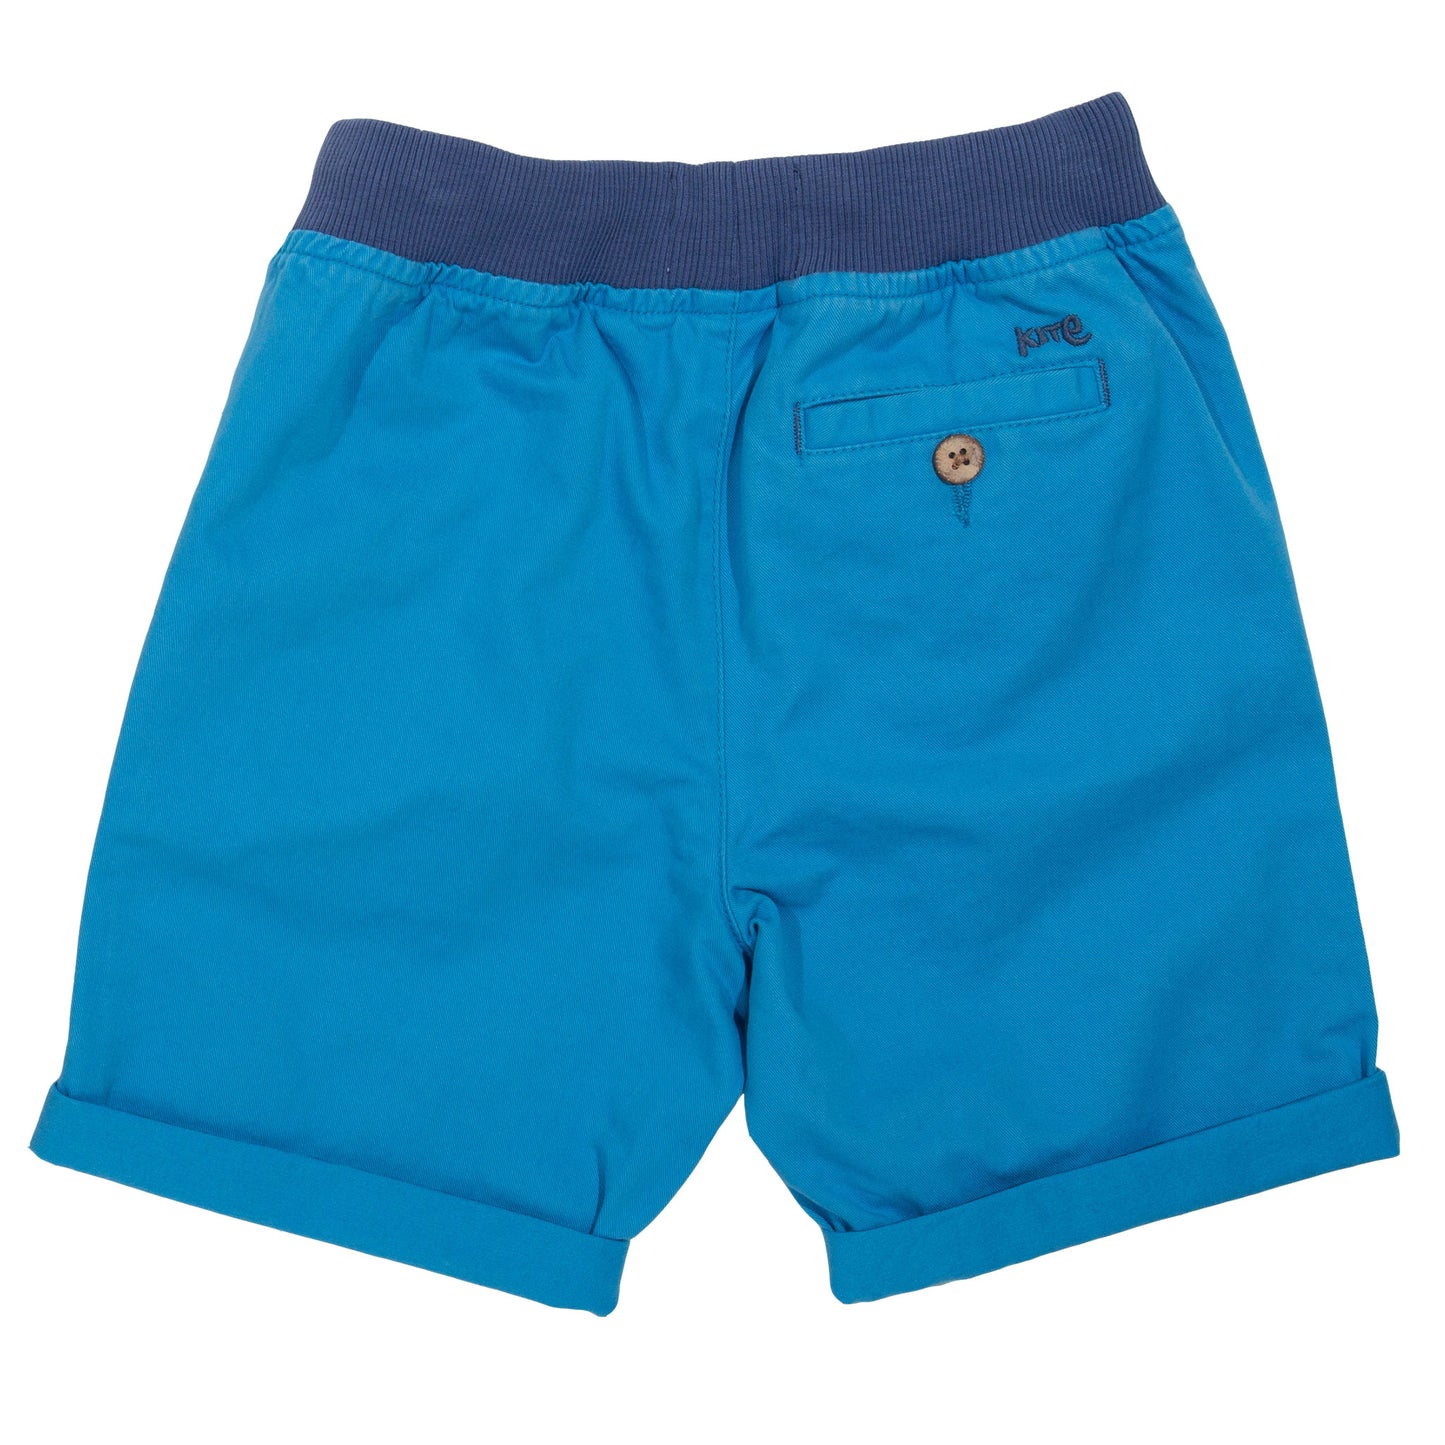 Yacht blue shorts